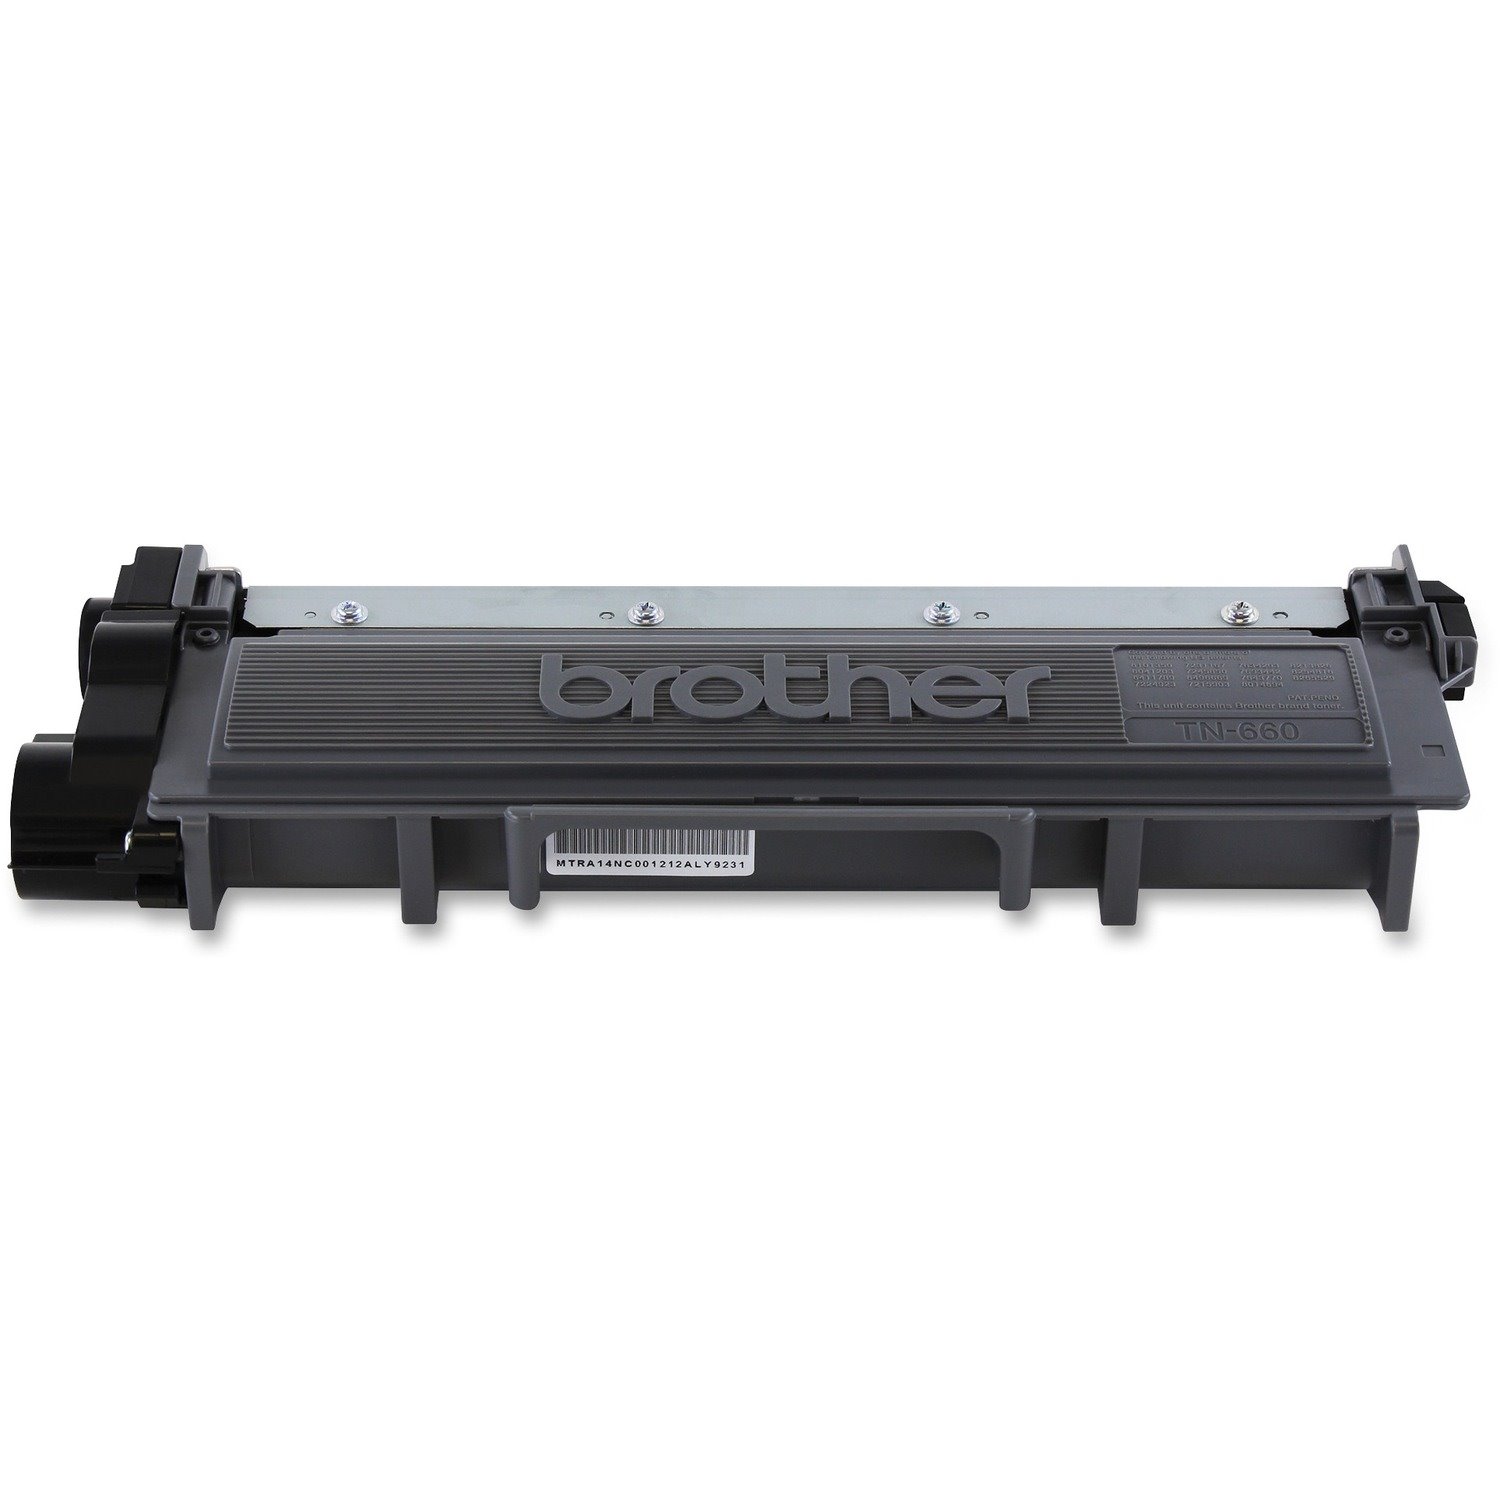 Toner Brother original TN660 haut rendement pour imprimante Brother